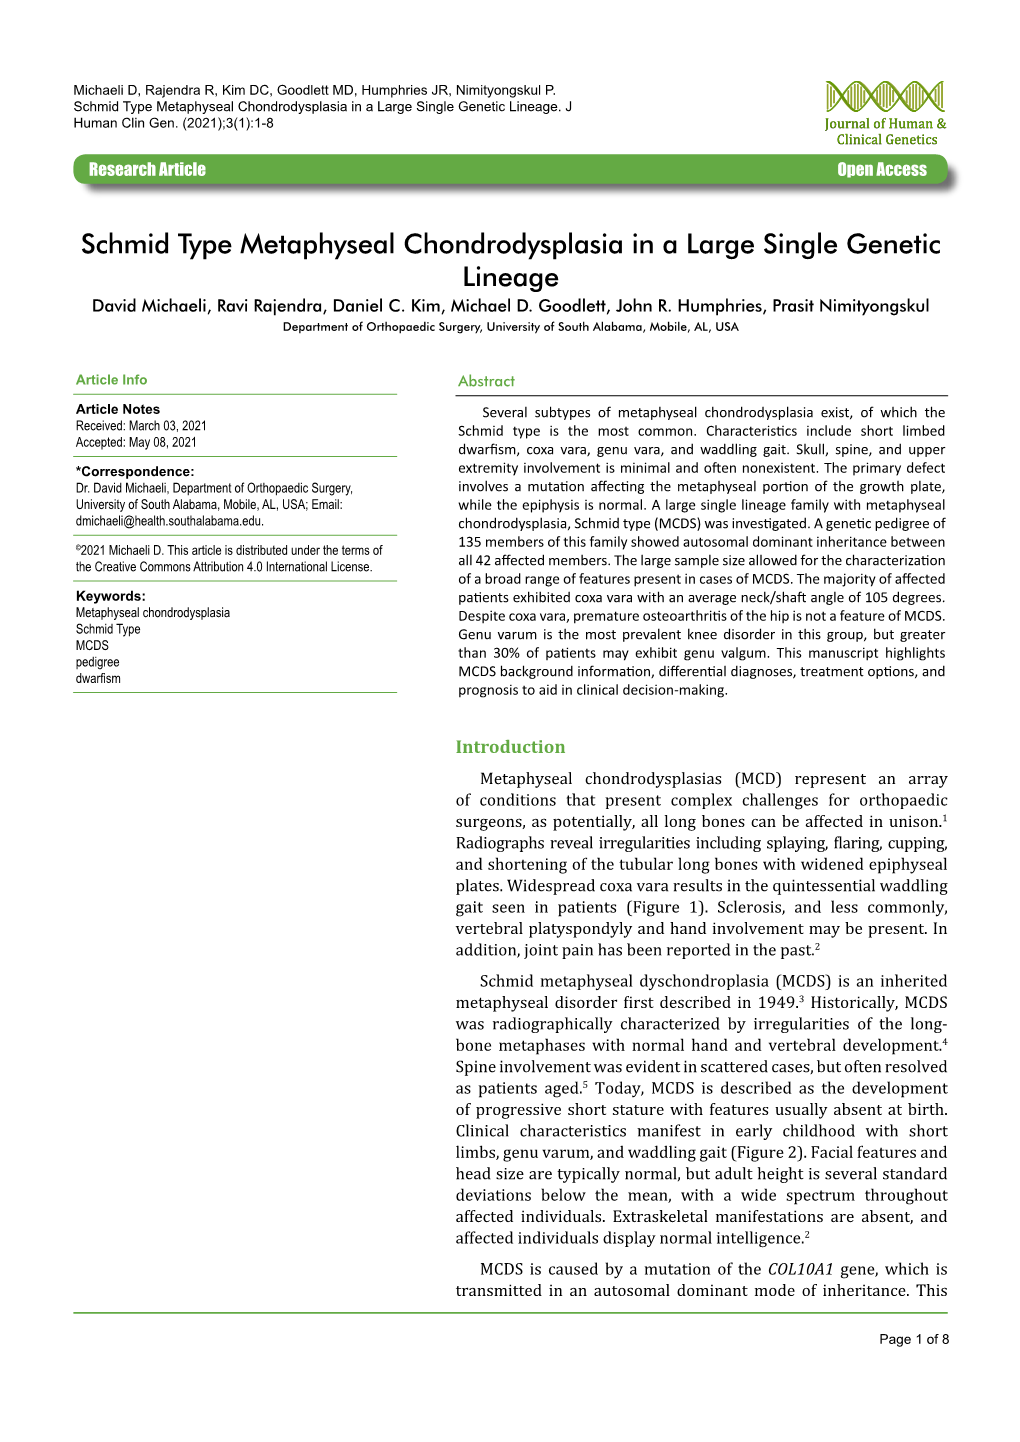 Schmid Type Metaphyseal Chondrodysplasia in a Large Single Genetic Lineage